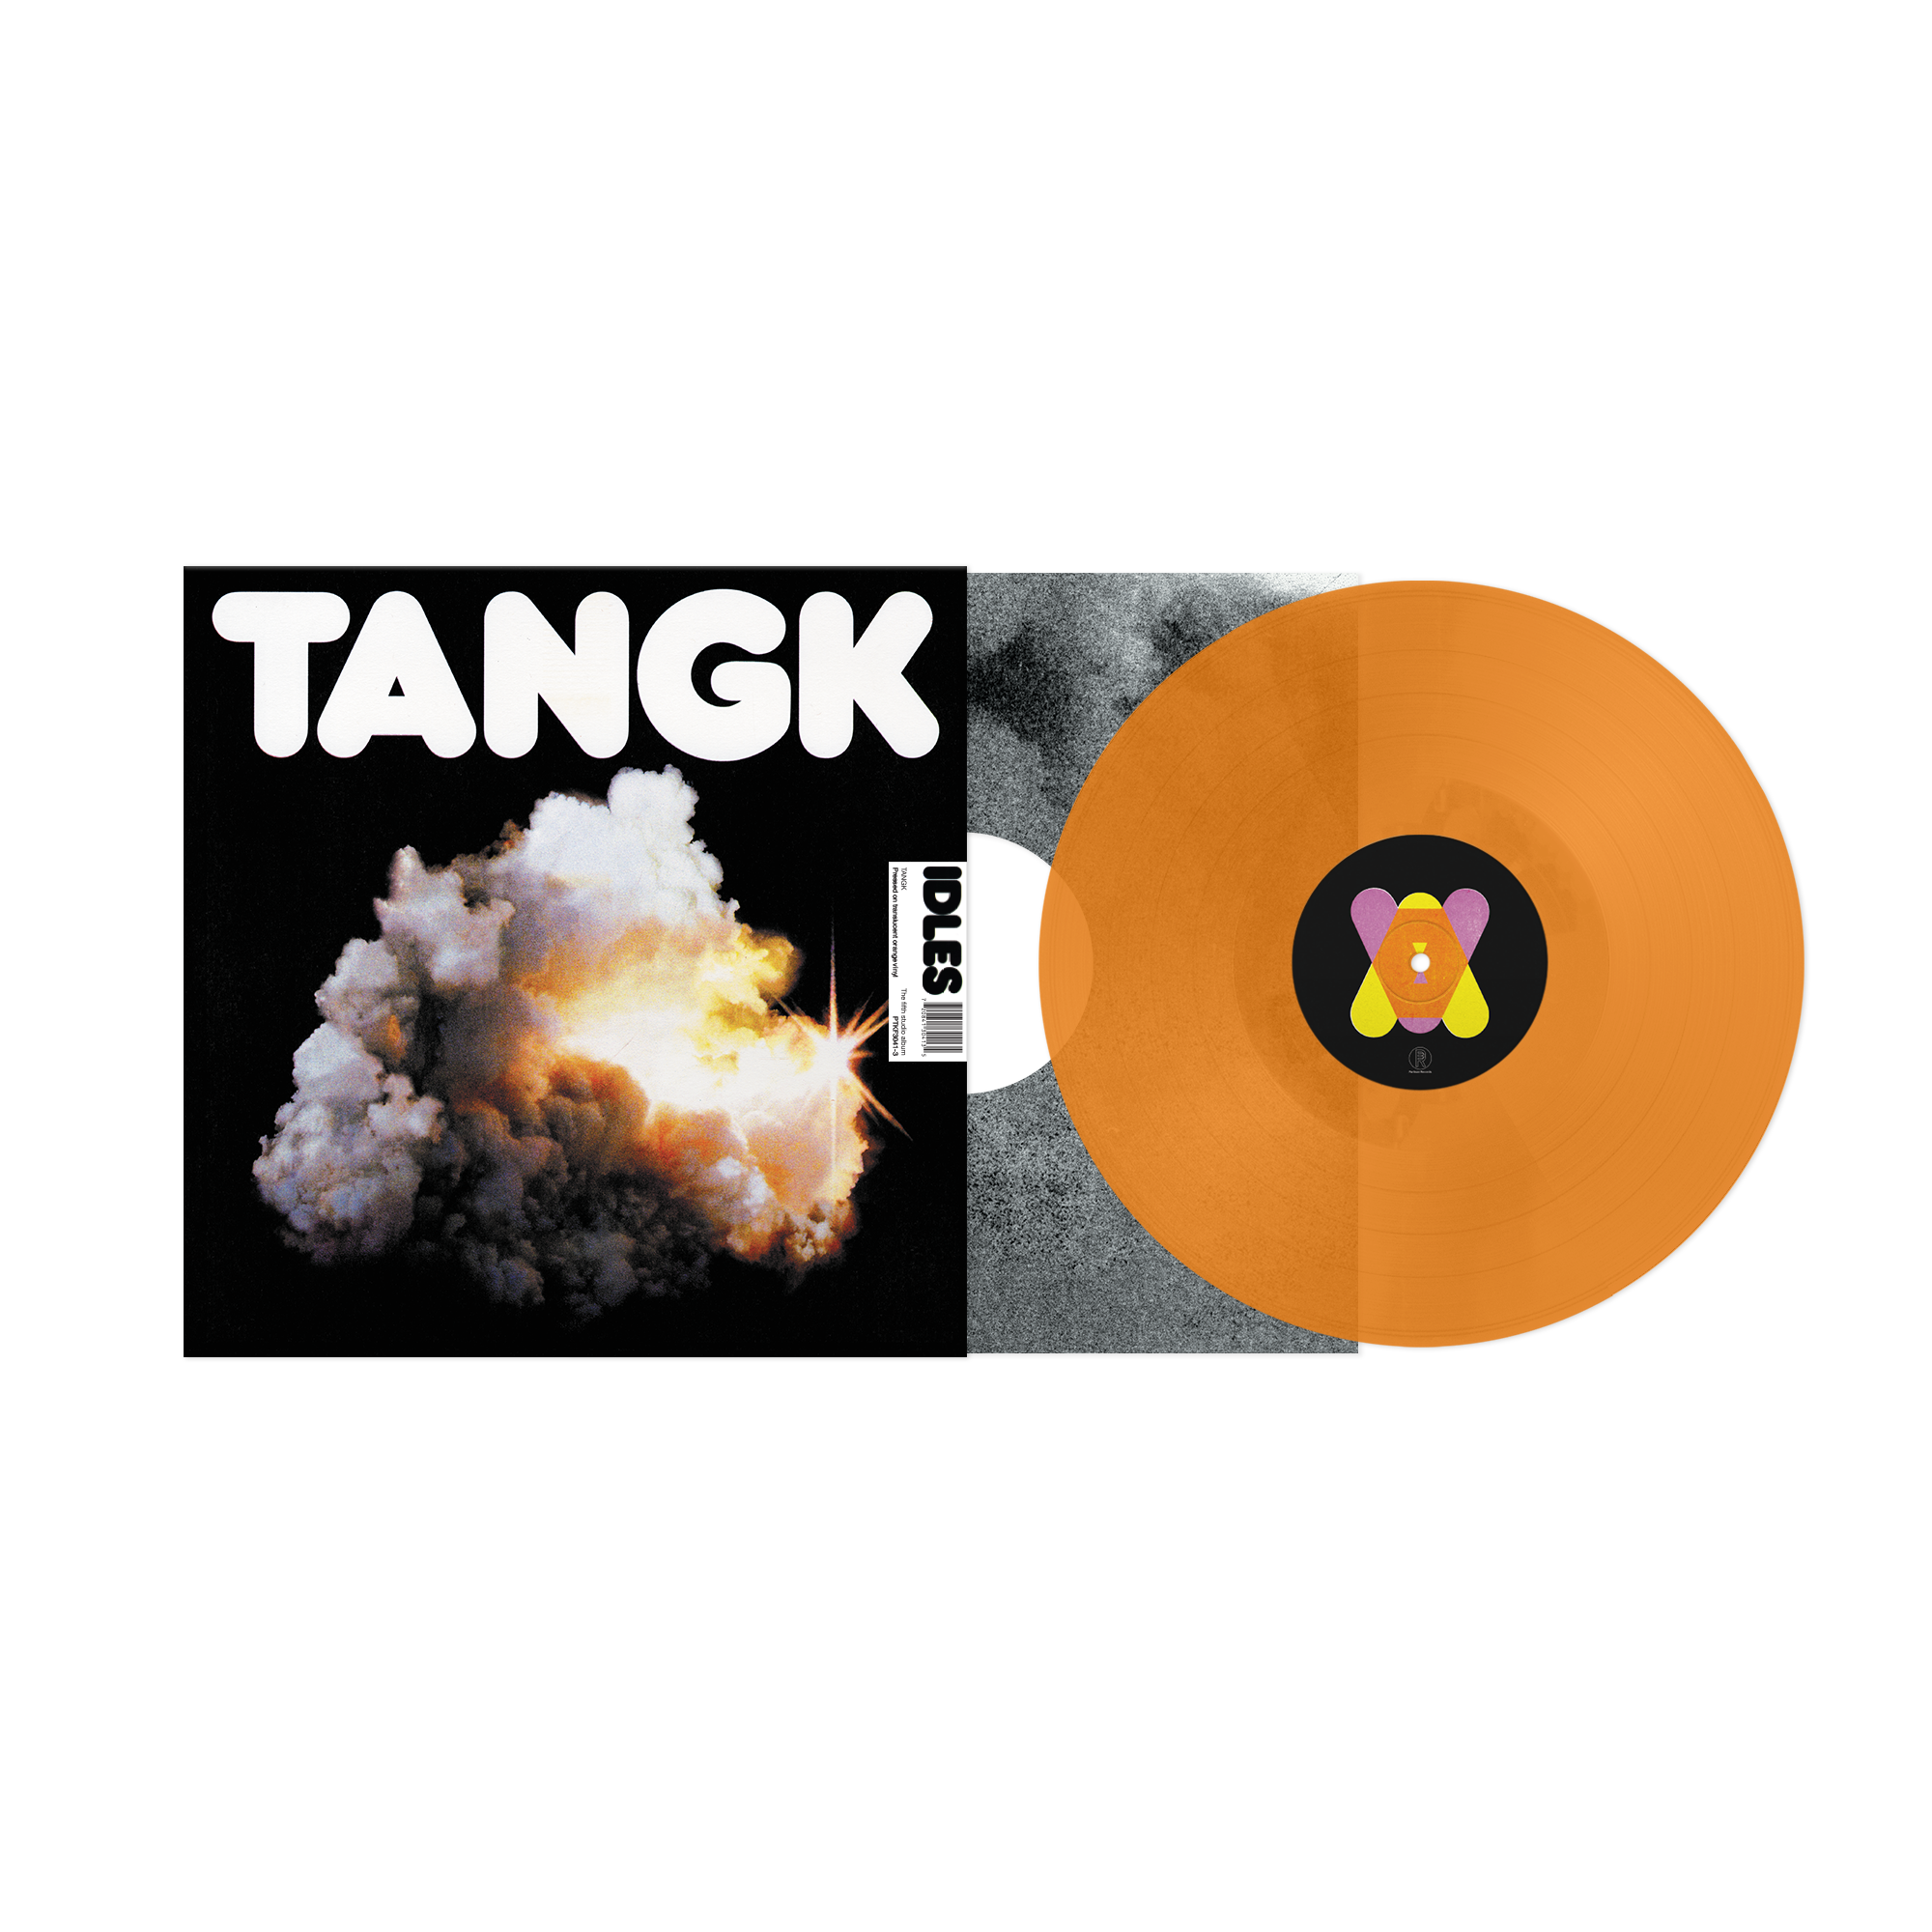 TANGK: Limited Translucent Orange Vinyl LP + CD